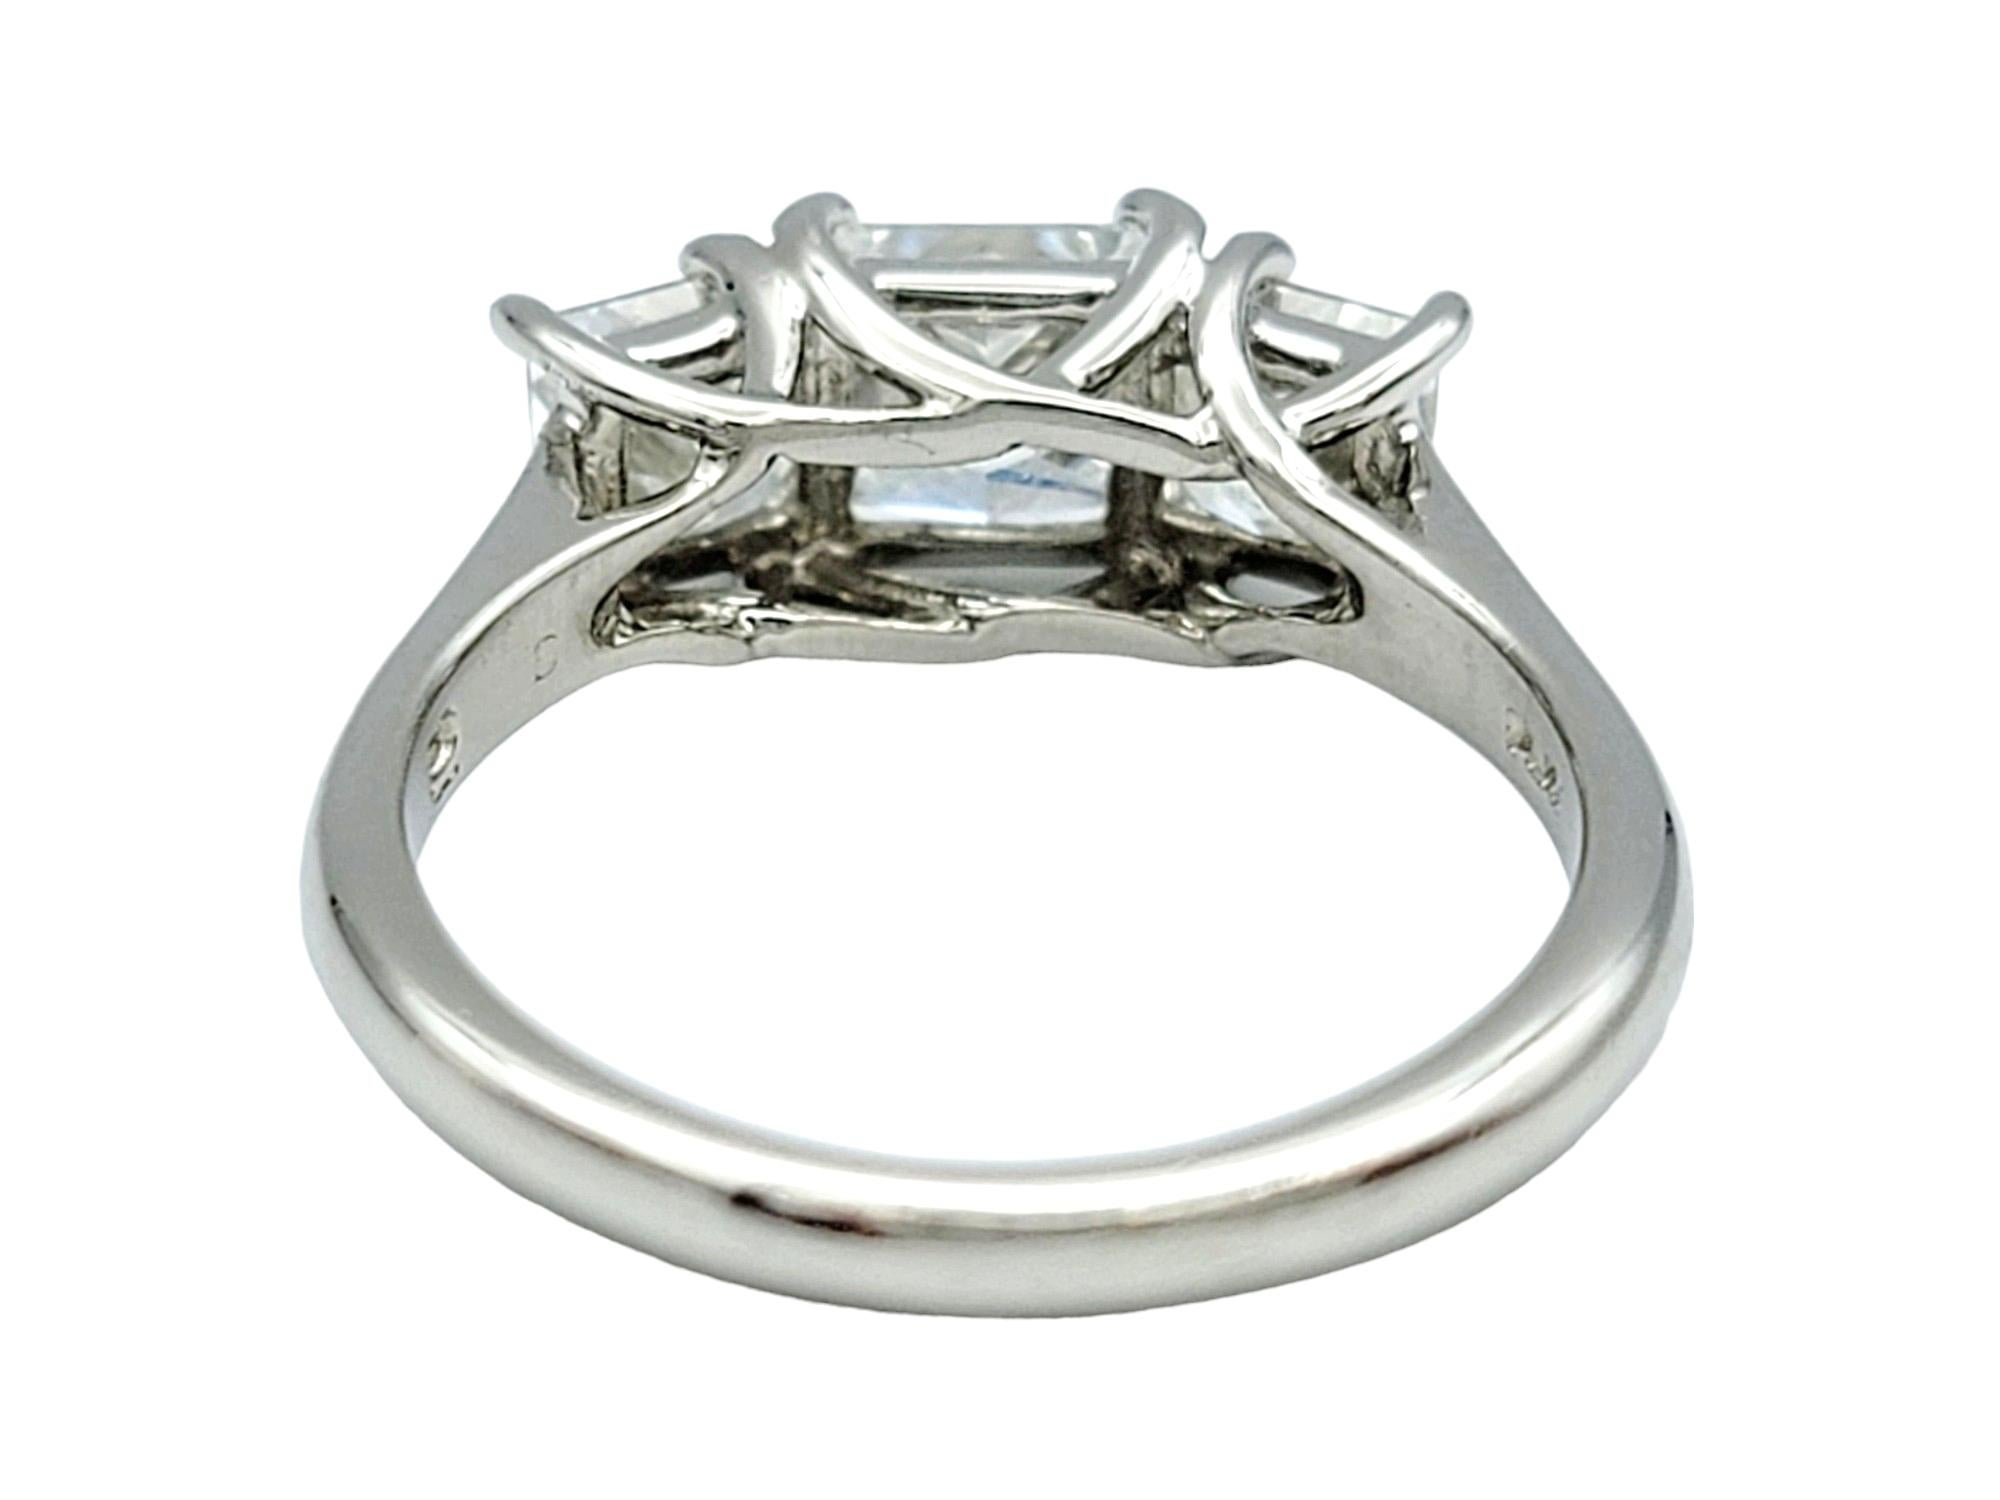 1.83 Total Carat Princess Cut Three Stone Diamond Ring Set in Platinum, Size 5.5 For Sale 1